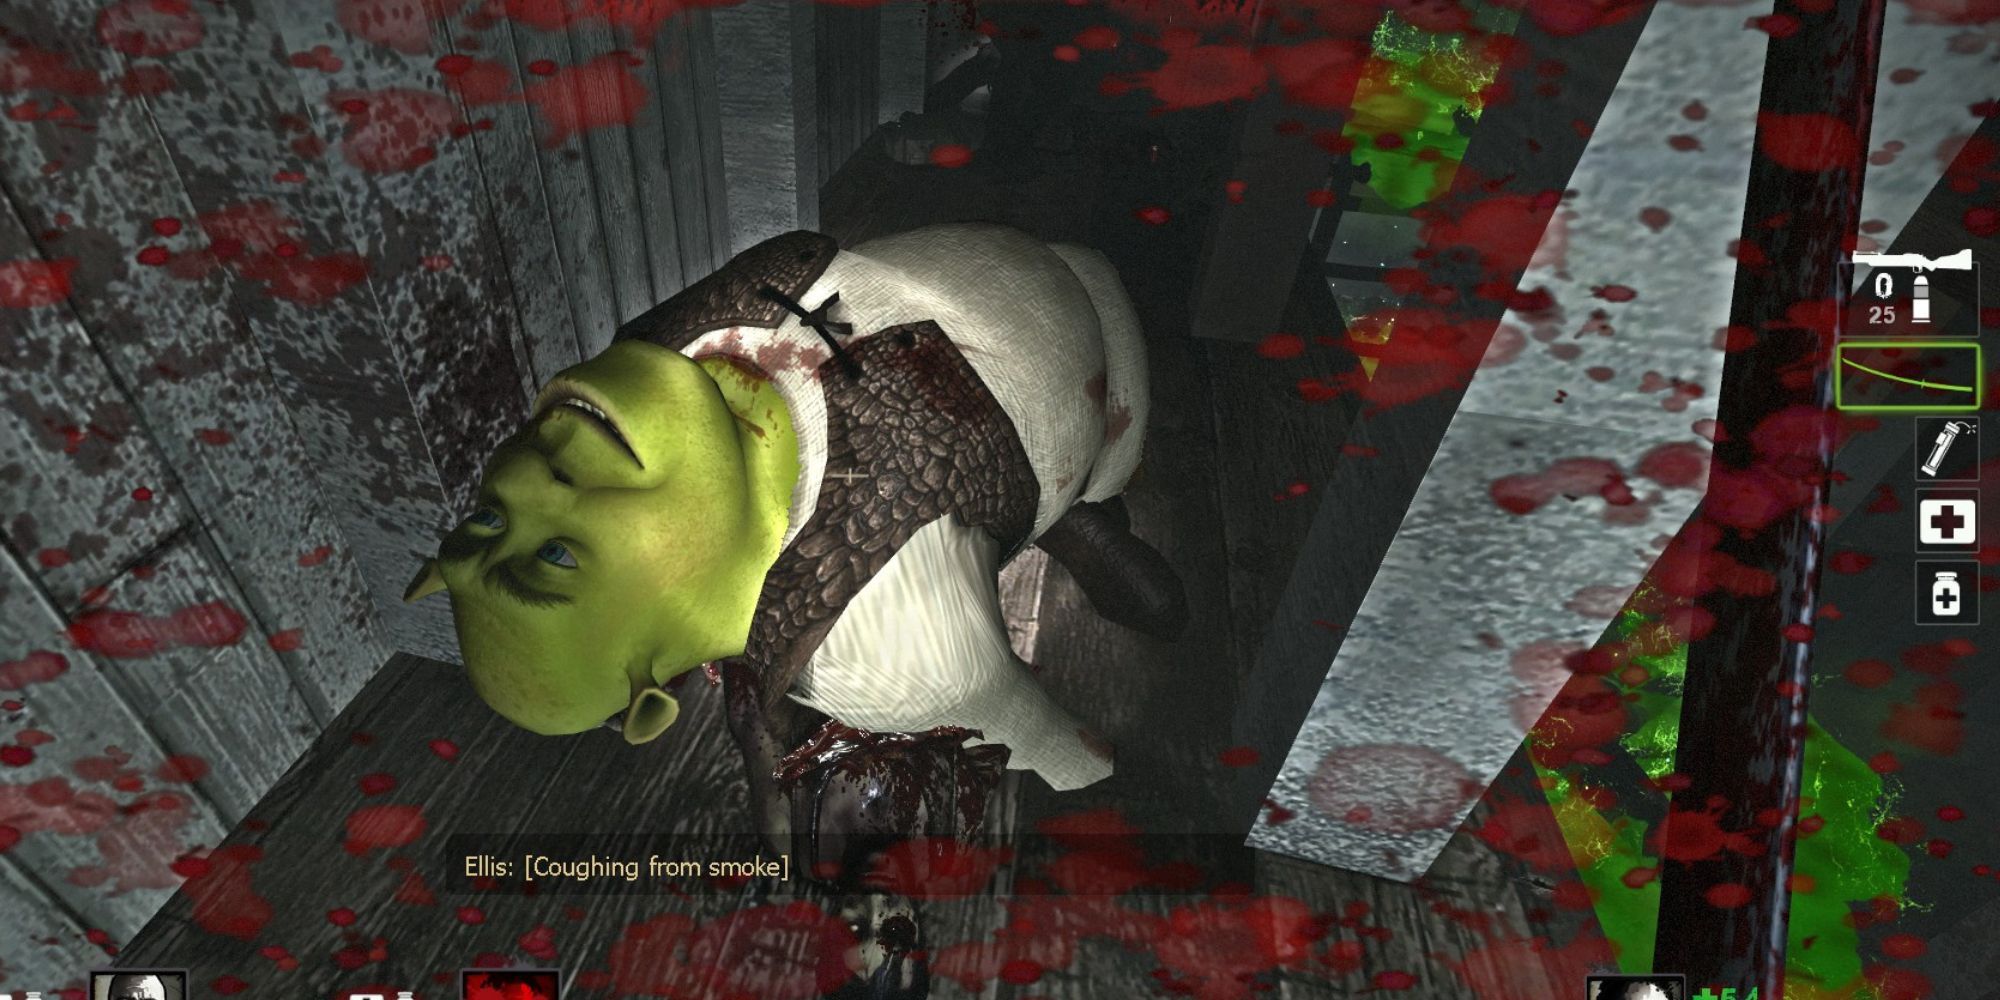 Shrek tank lies dead on the floor